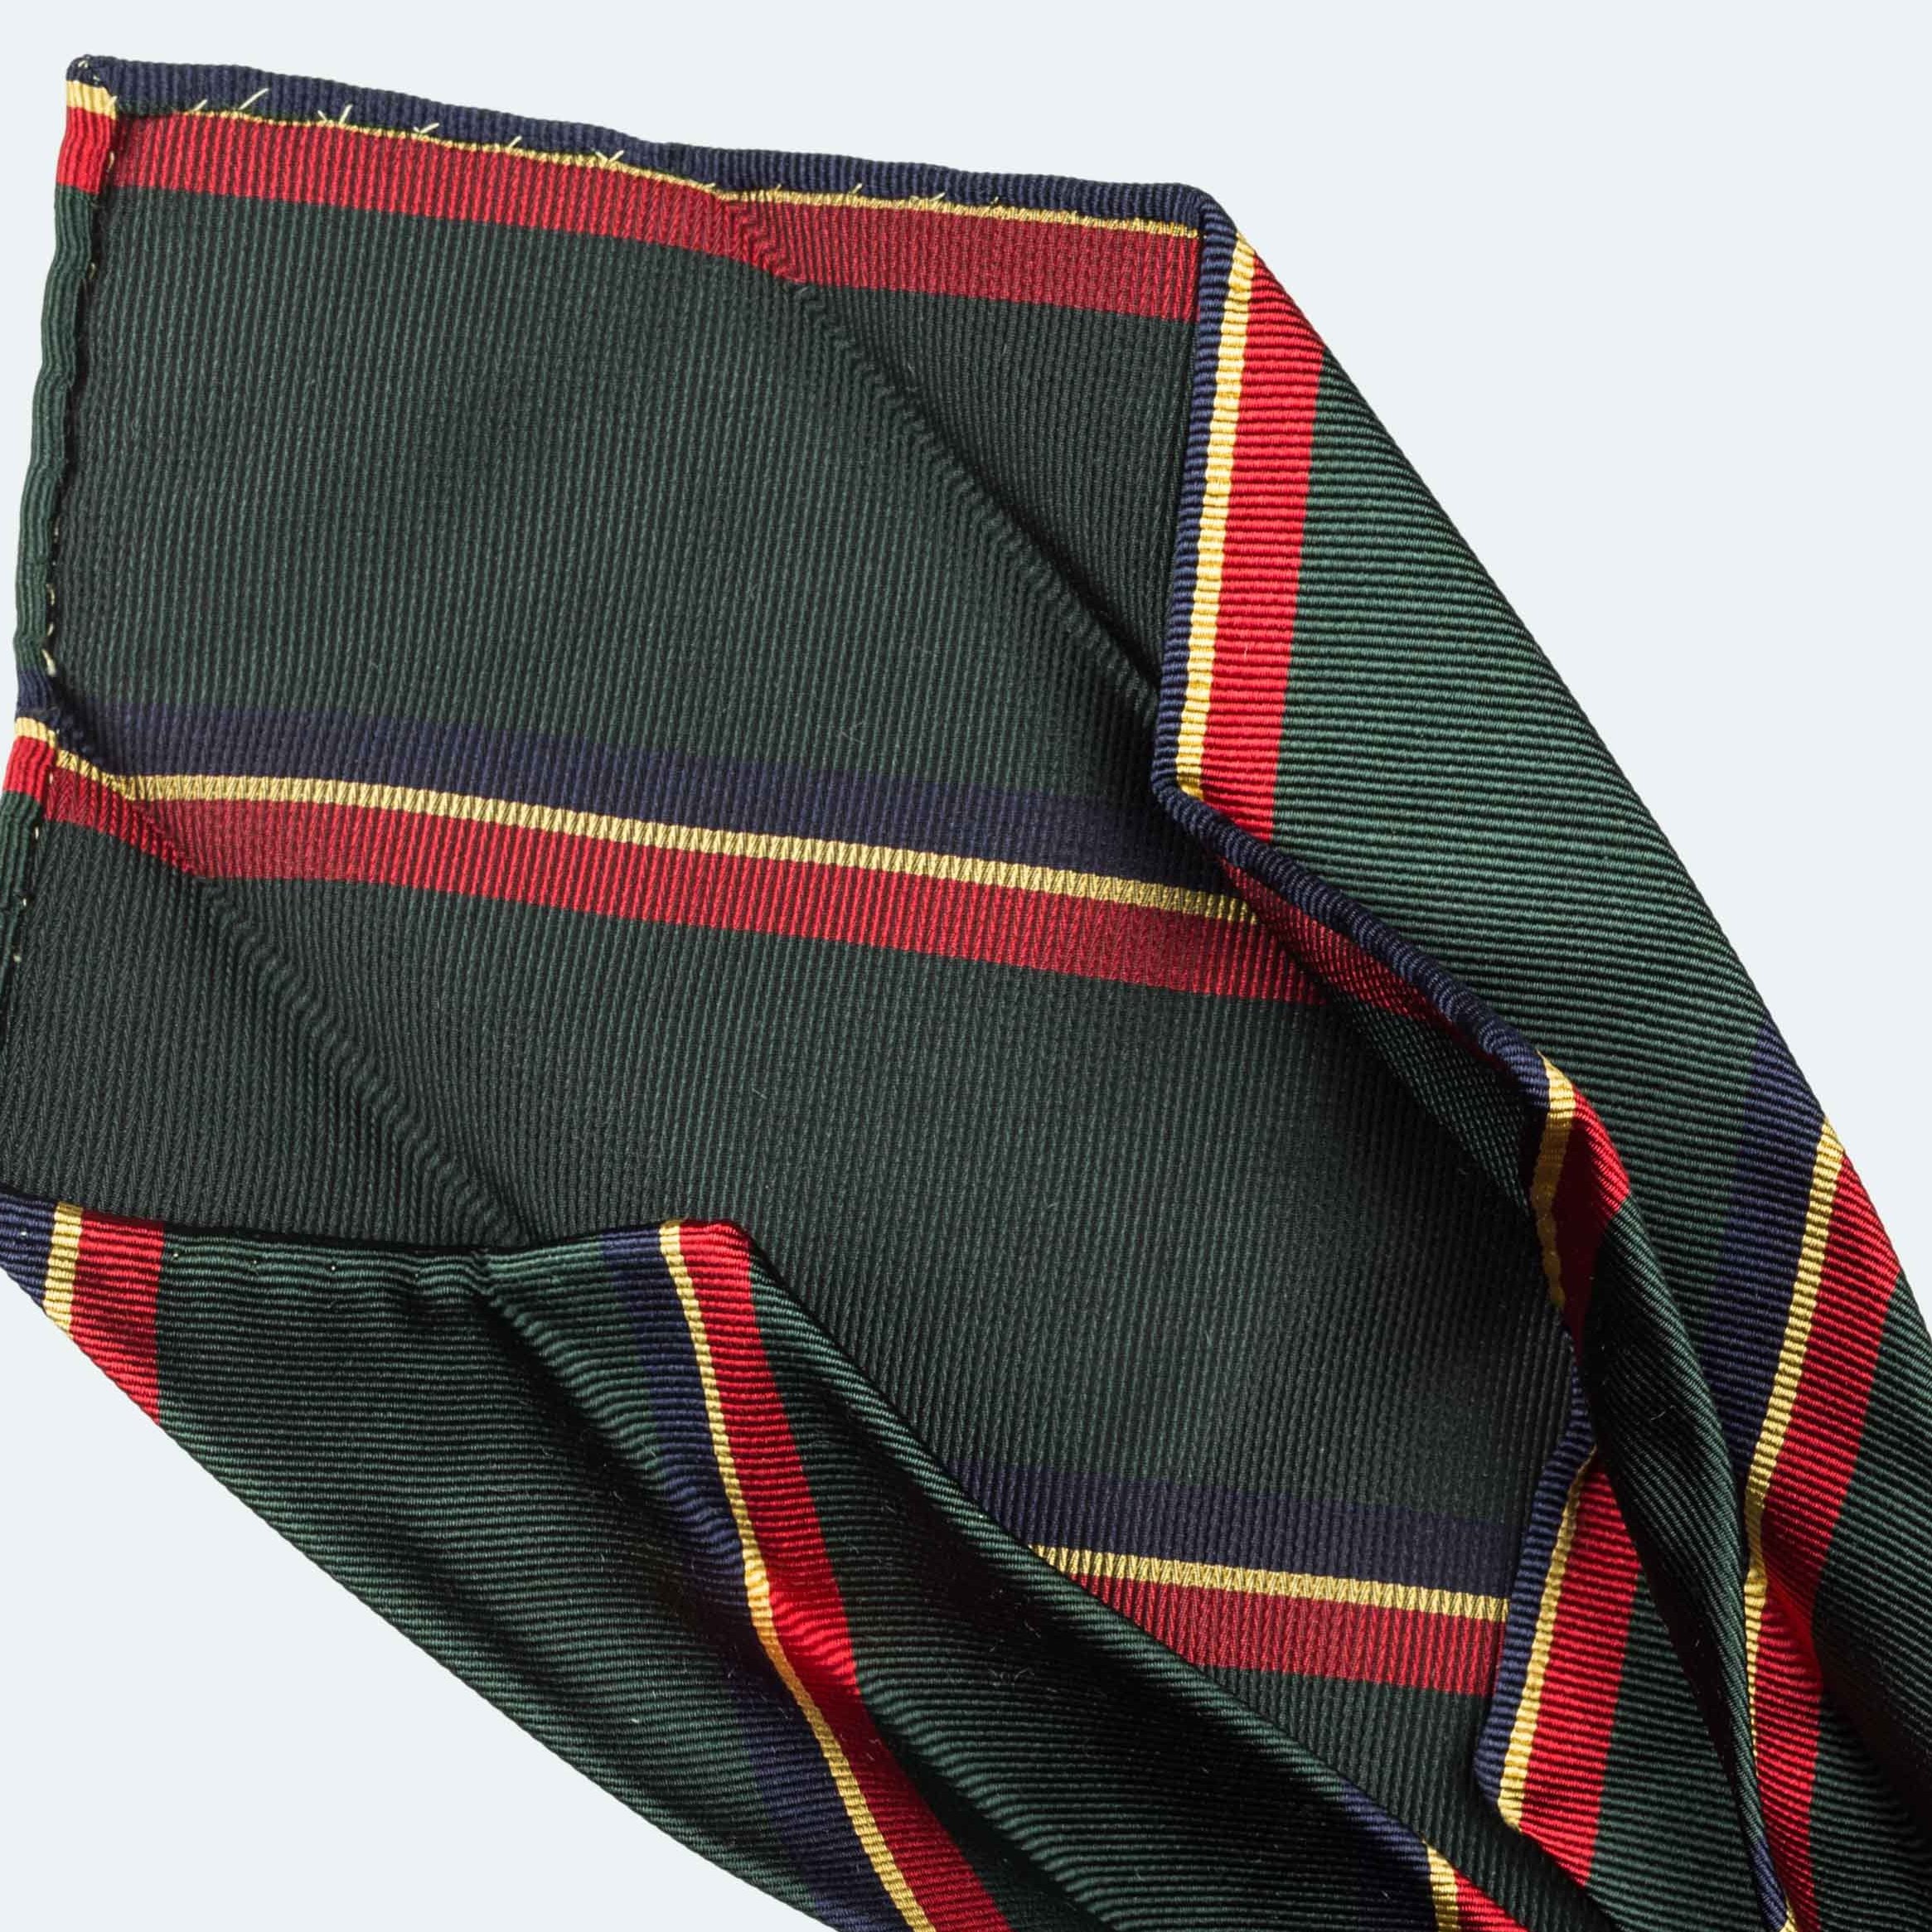 Snygga slipsar - randig slips från Berg&Berg